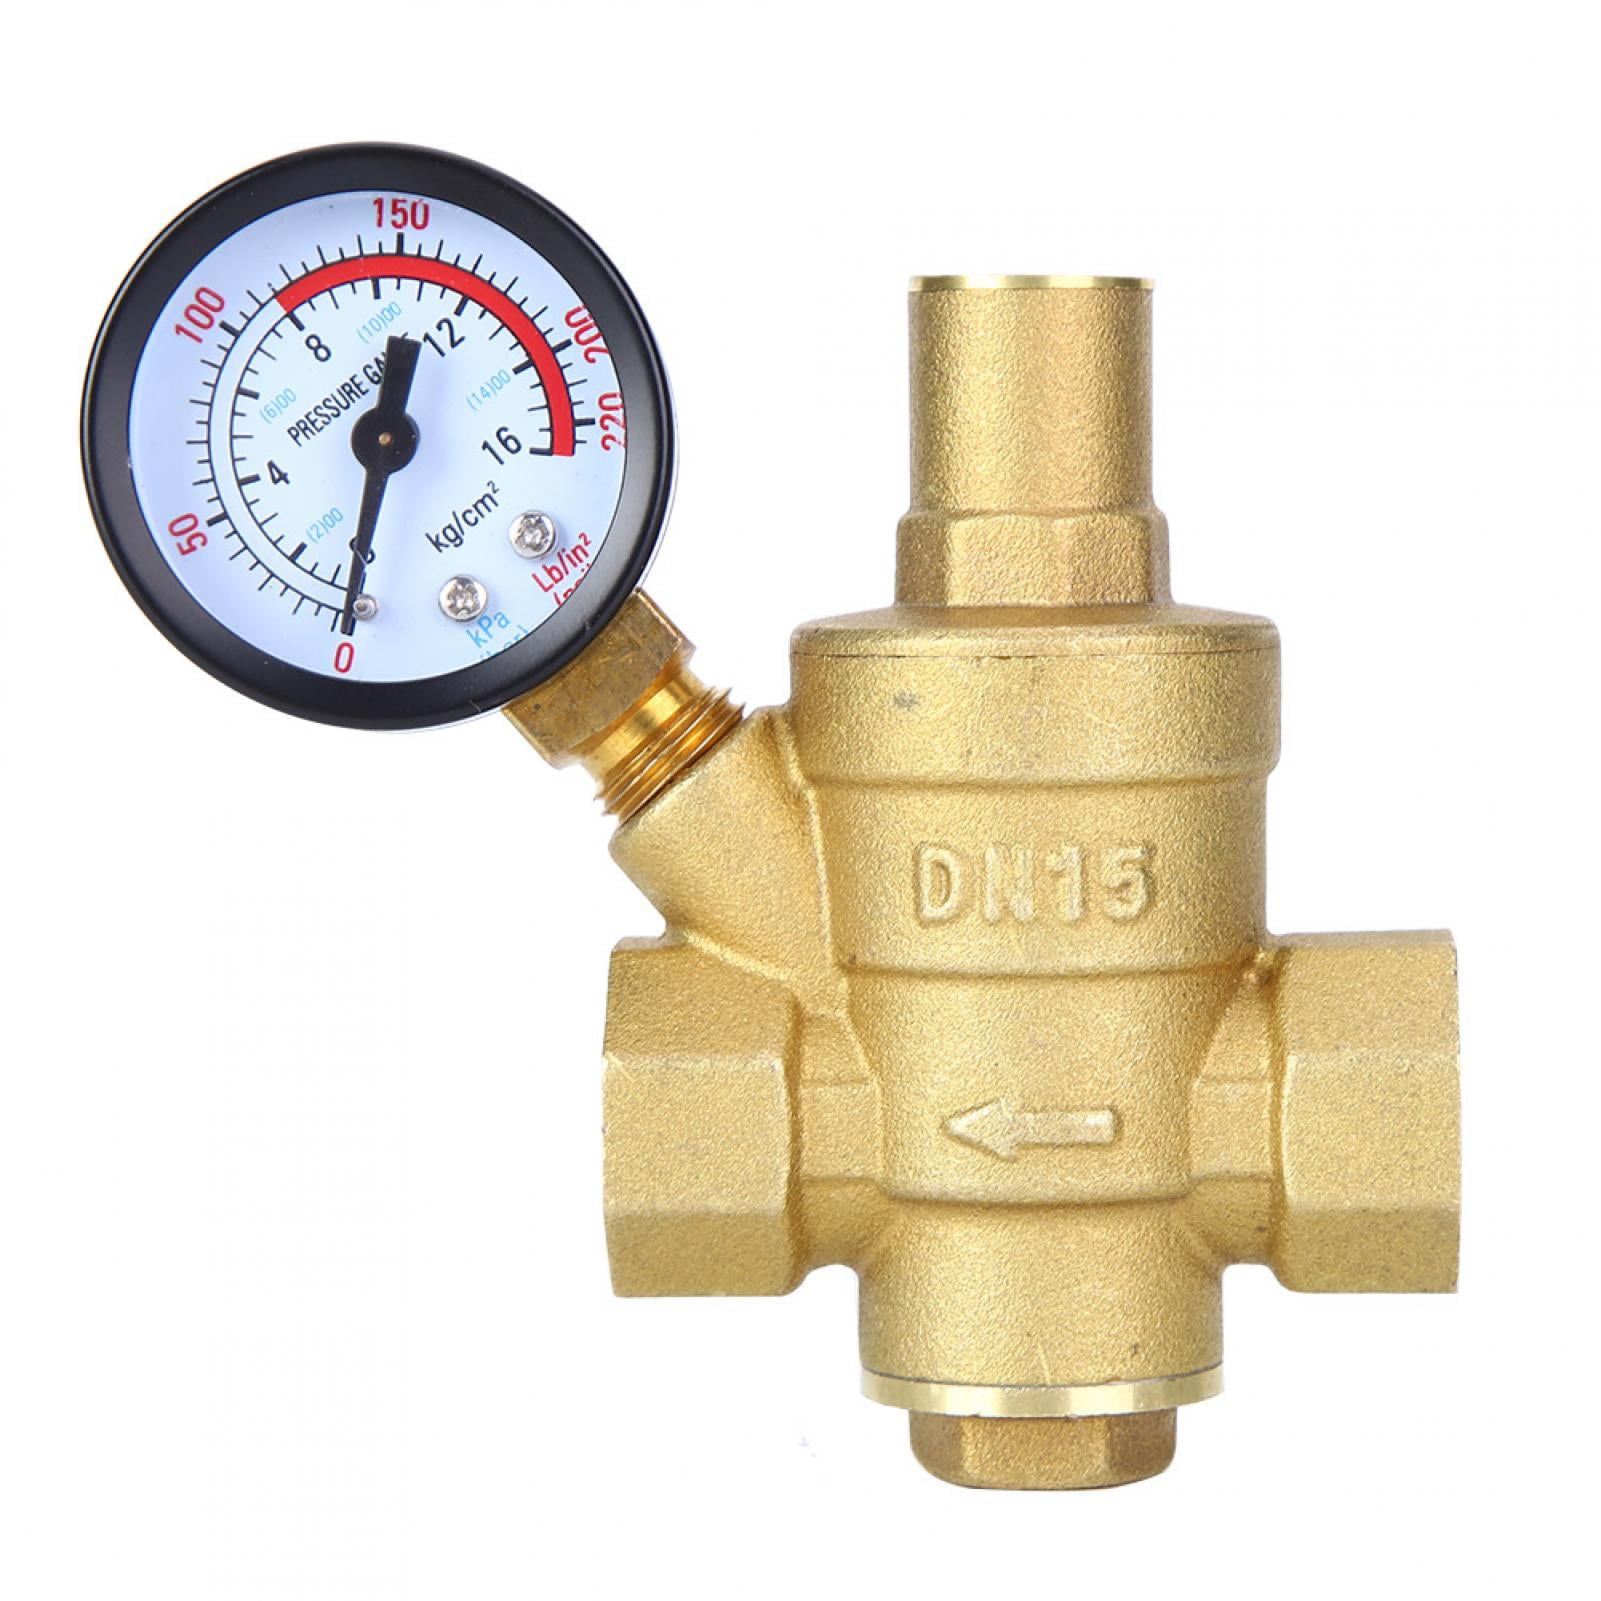 Adjustable DN15 Brass Water Pressure Regulator Reducer with Gauge Meter Water Pressure Regulator 